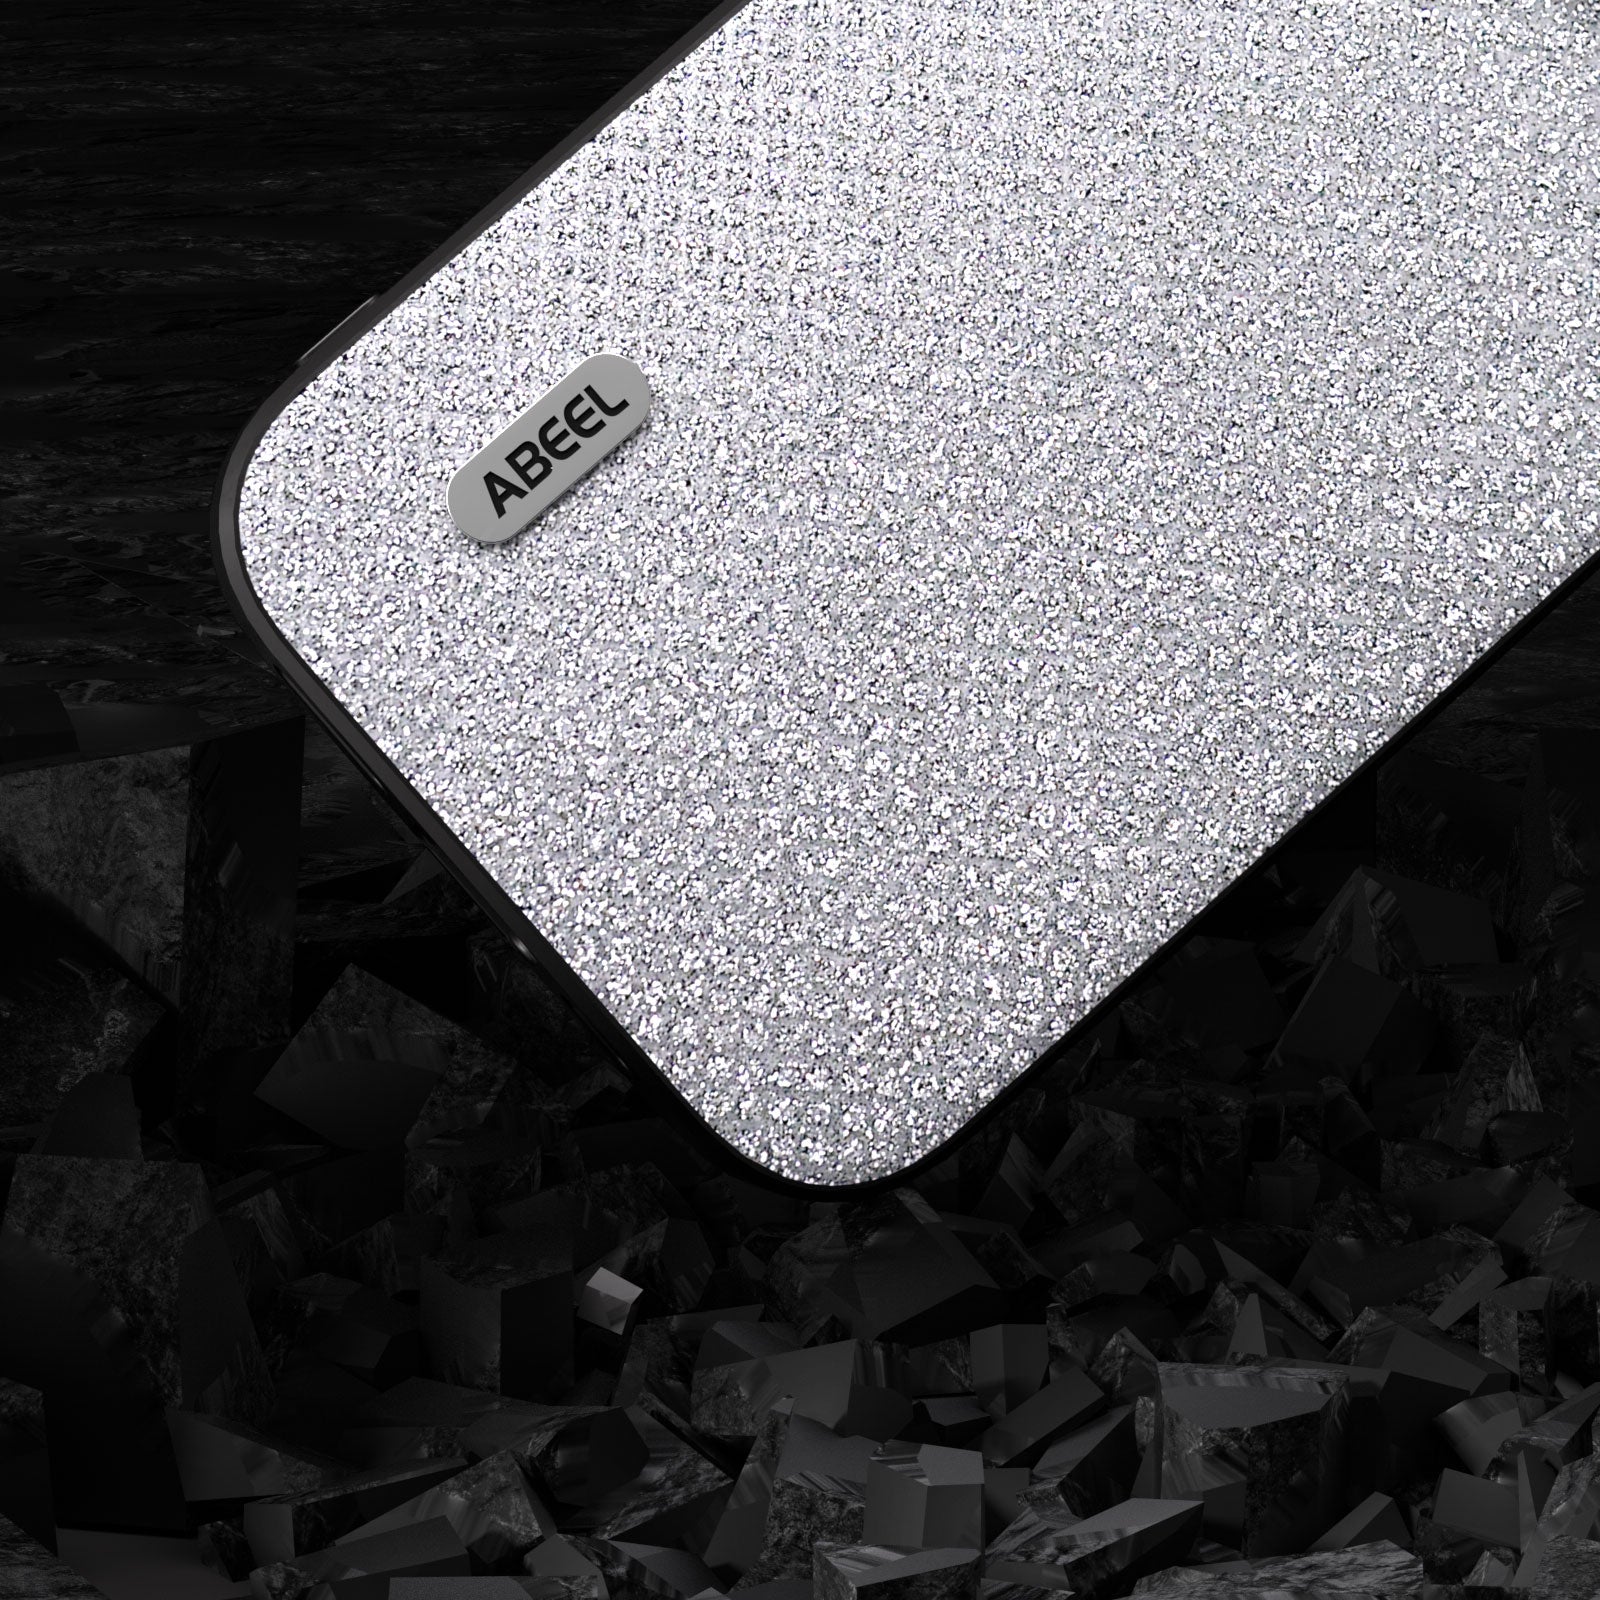 Uniqkart For iPhone 15 Glitter Rhinestone Texture Cover PU Leather+PC+TPU Shockproof Phone Case - Silver